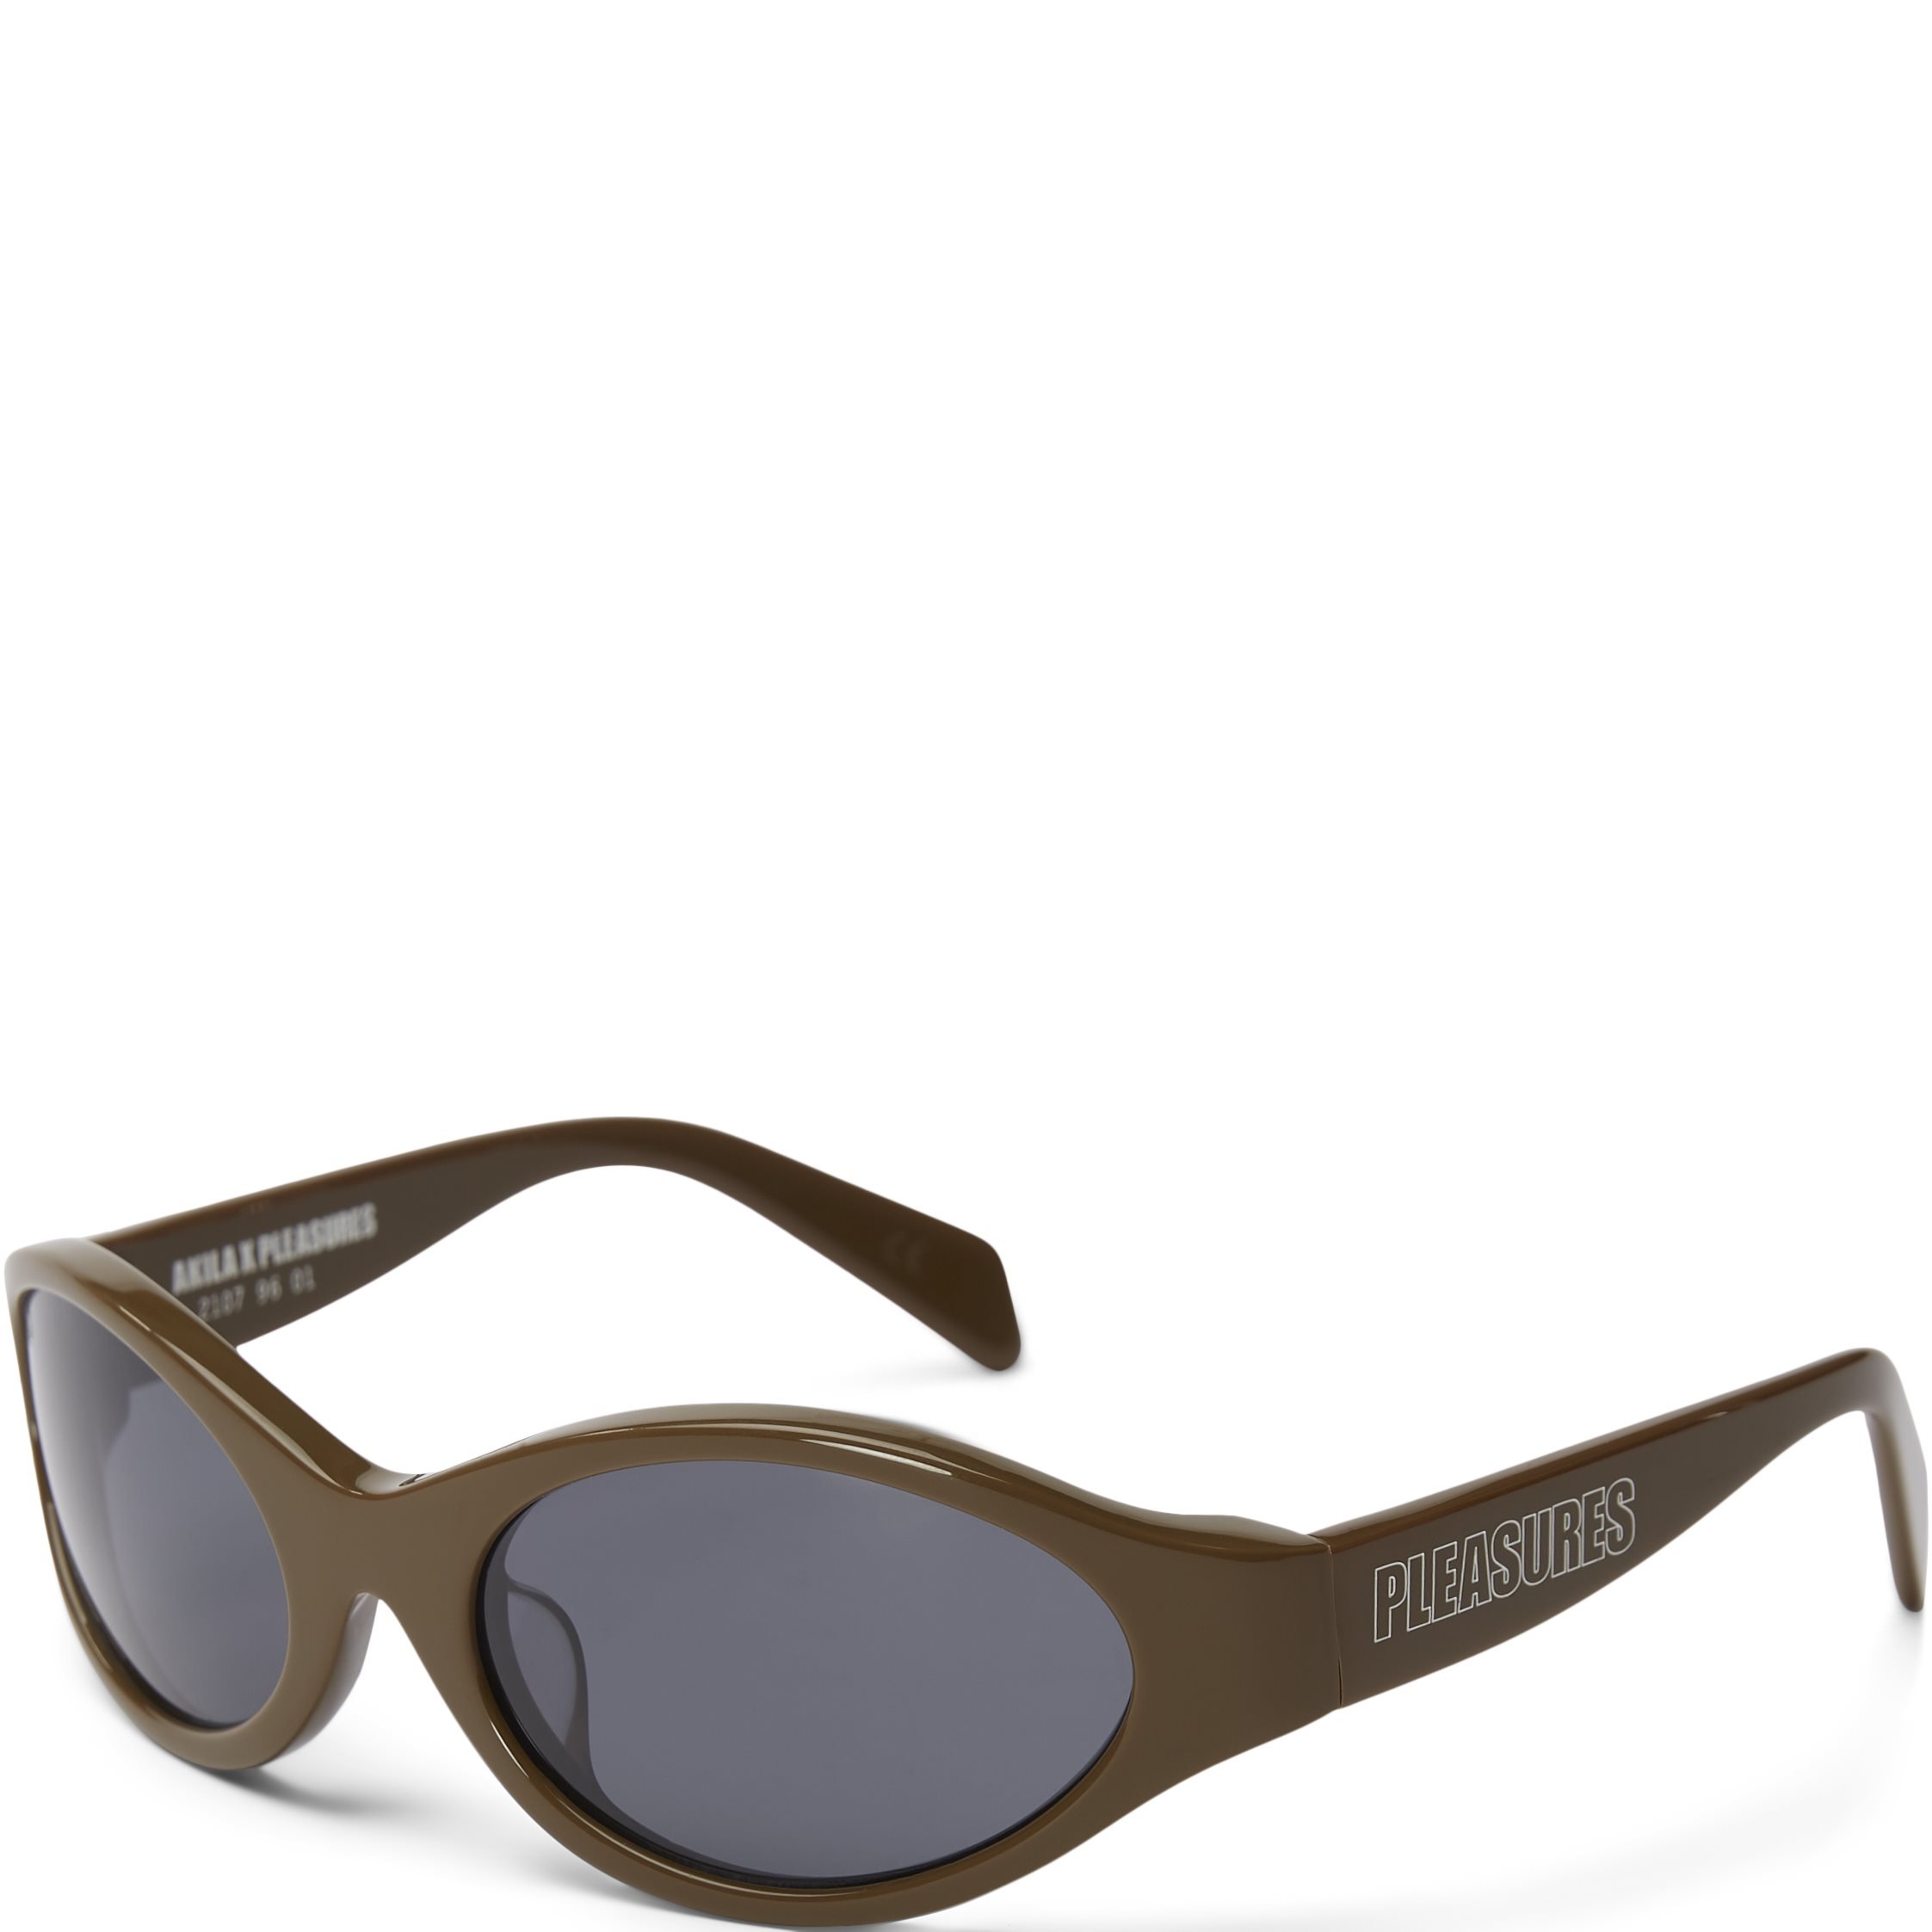 Reflex Sunglasses - Accessories - Brown